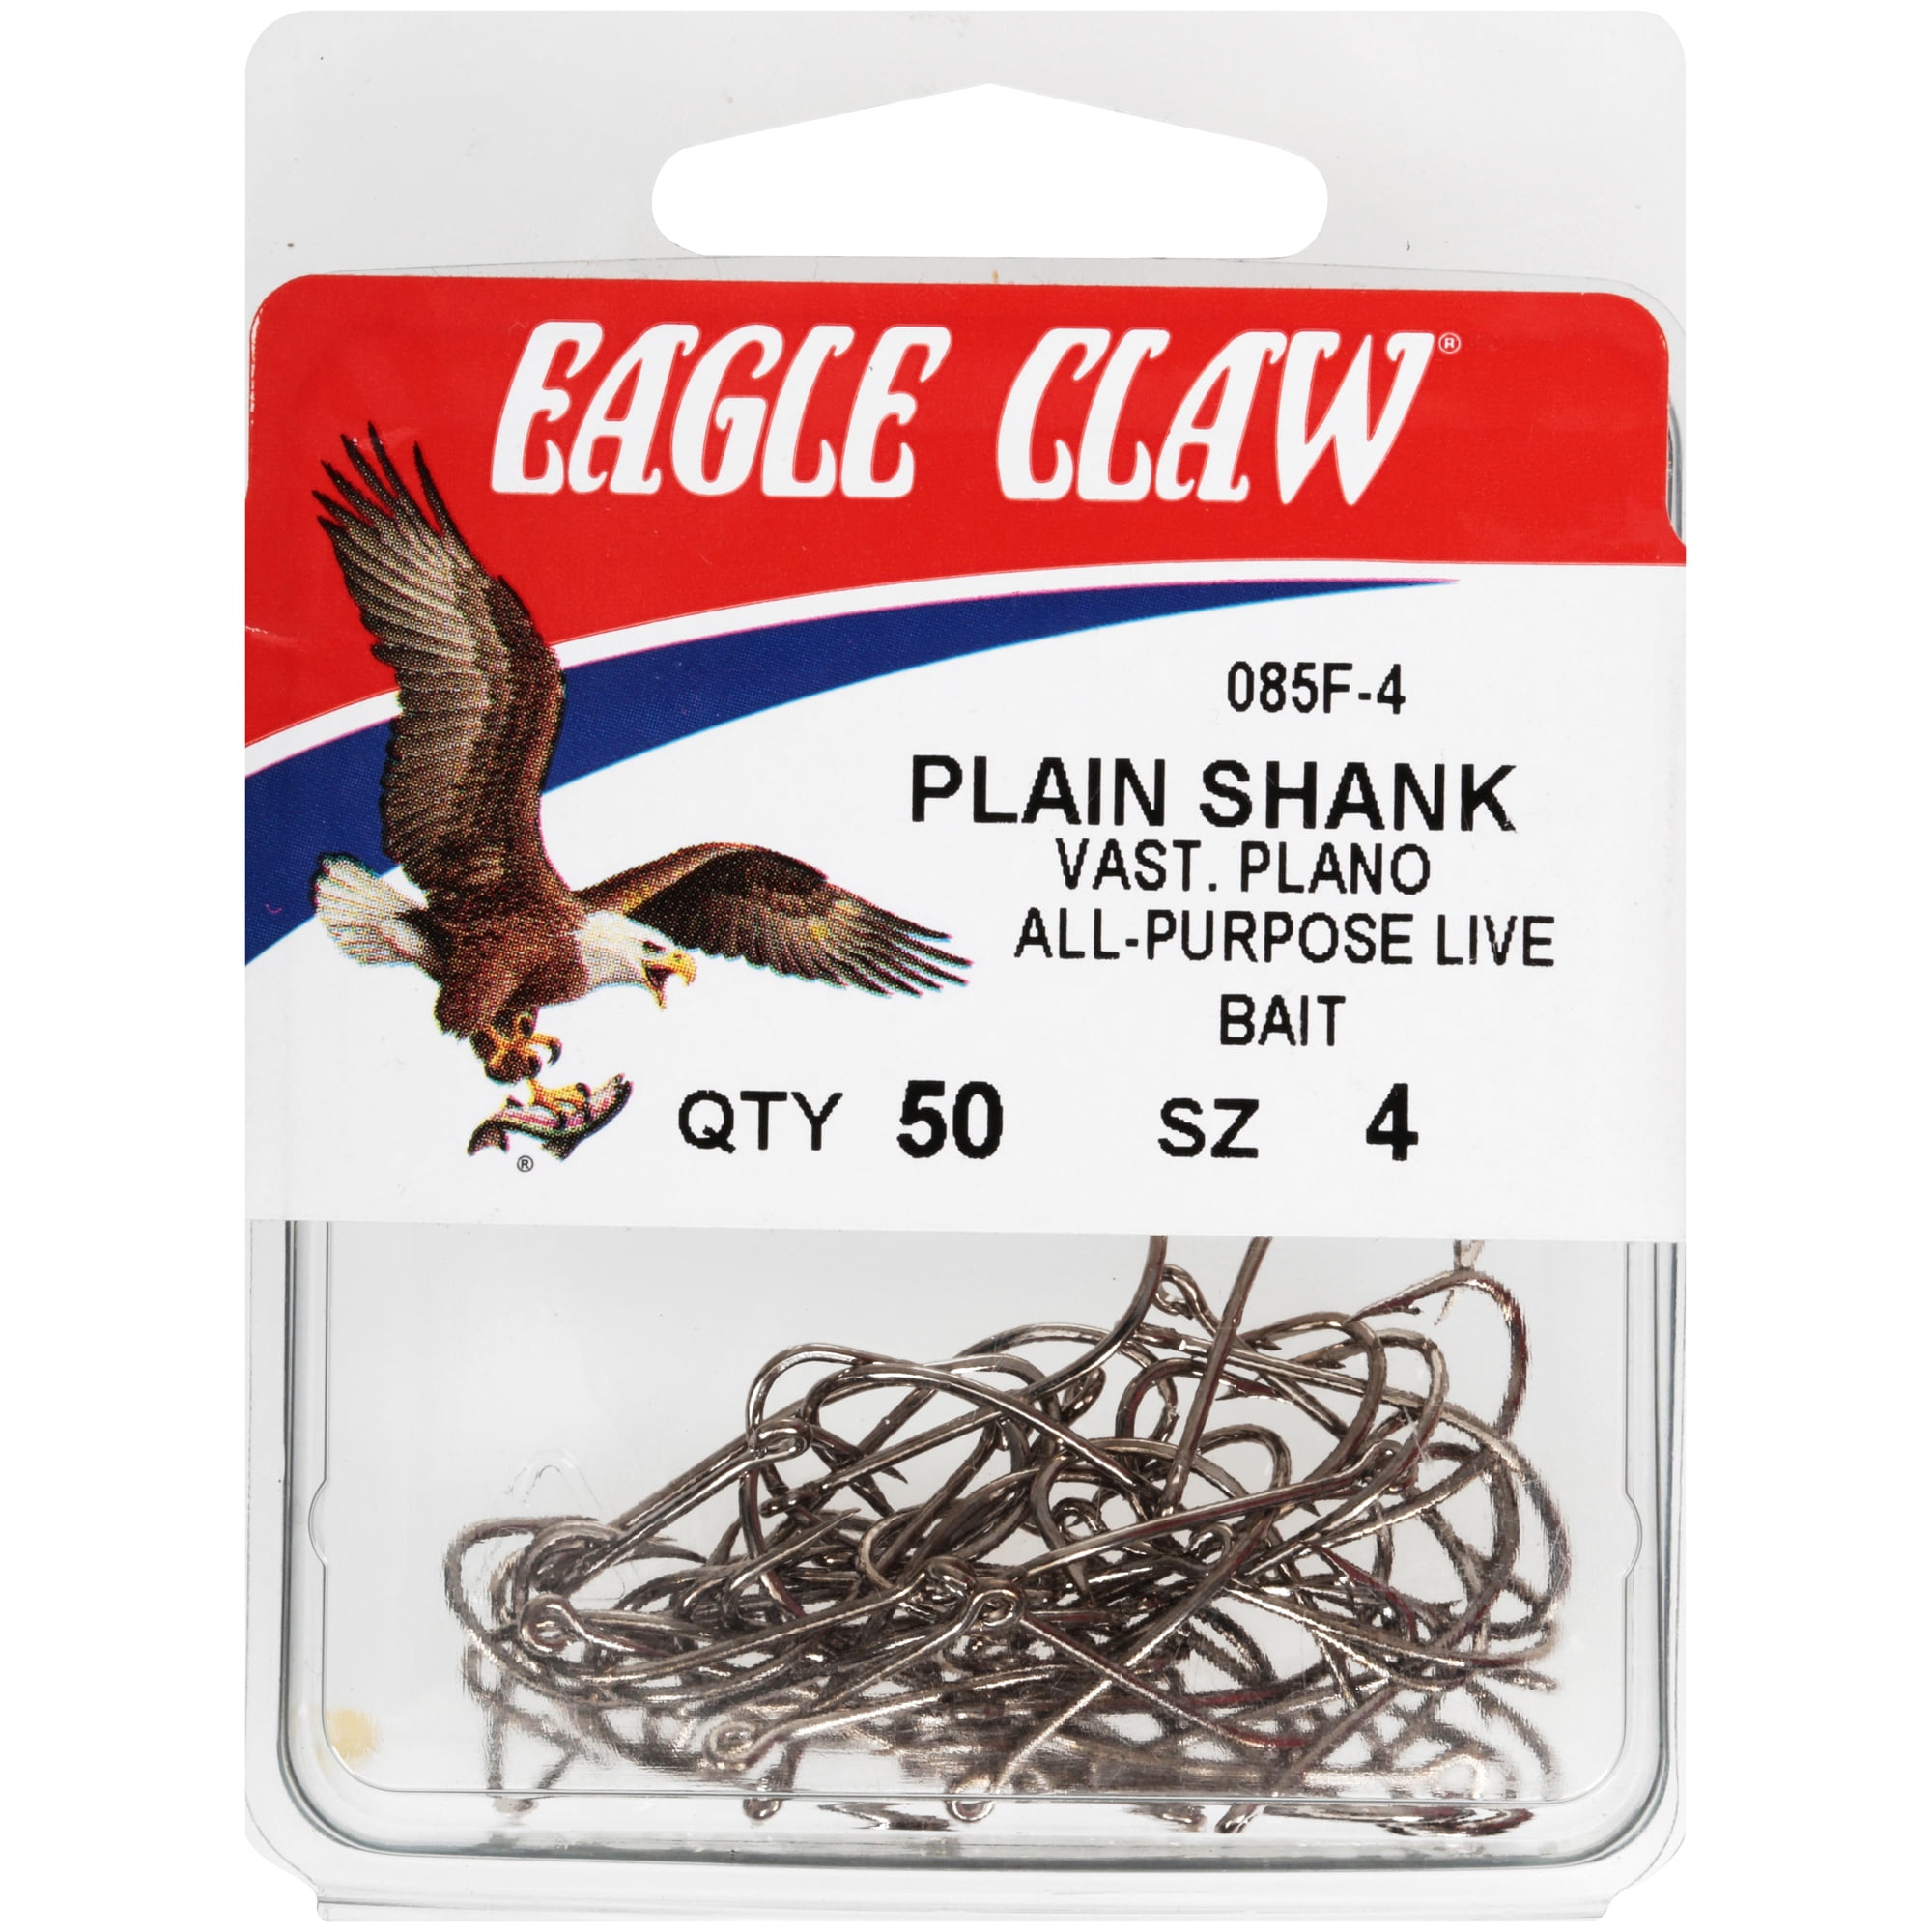 Eagle Claw 085FH-4 All-Purpose Live Bait Plain Shank Fish Hooks